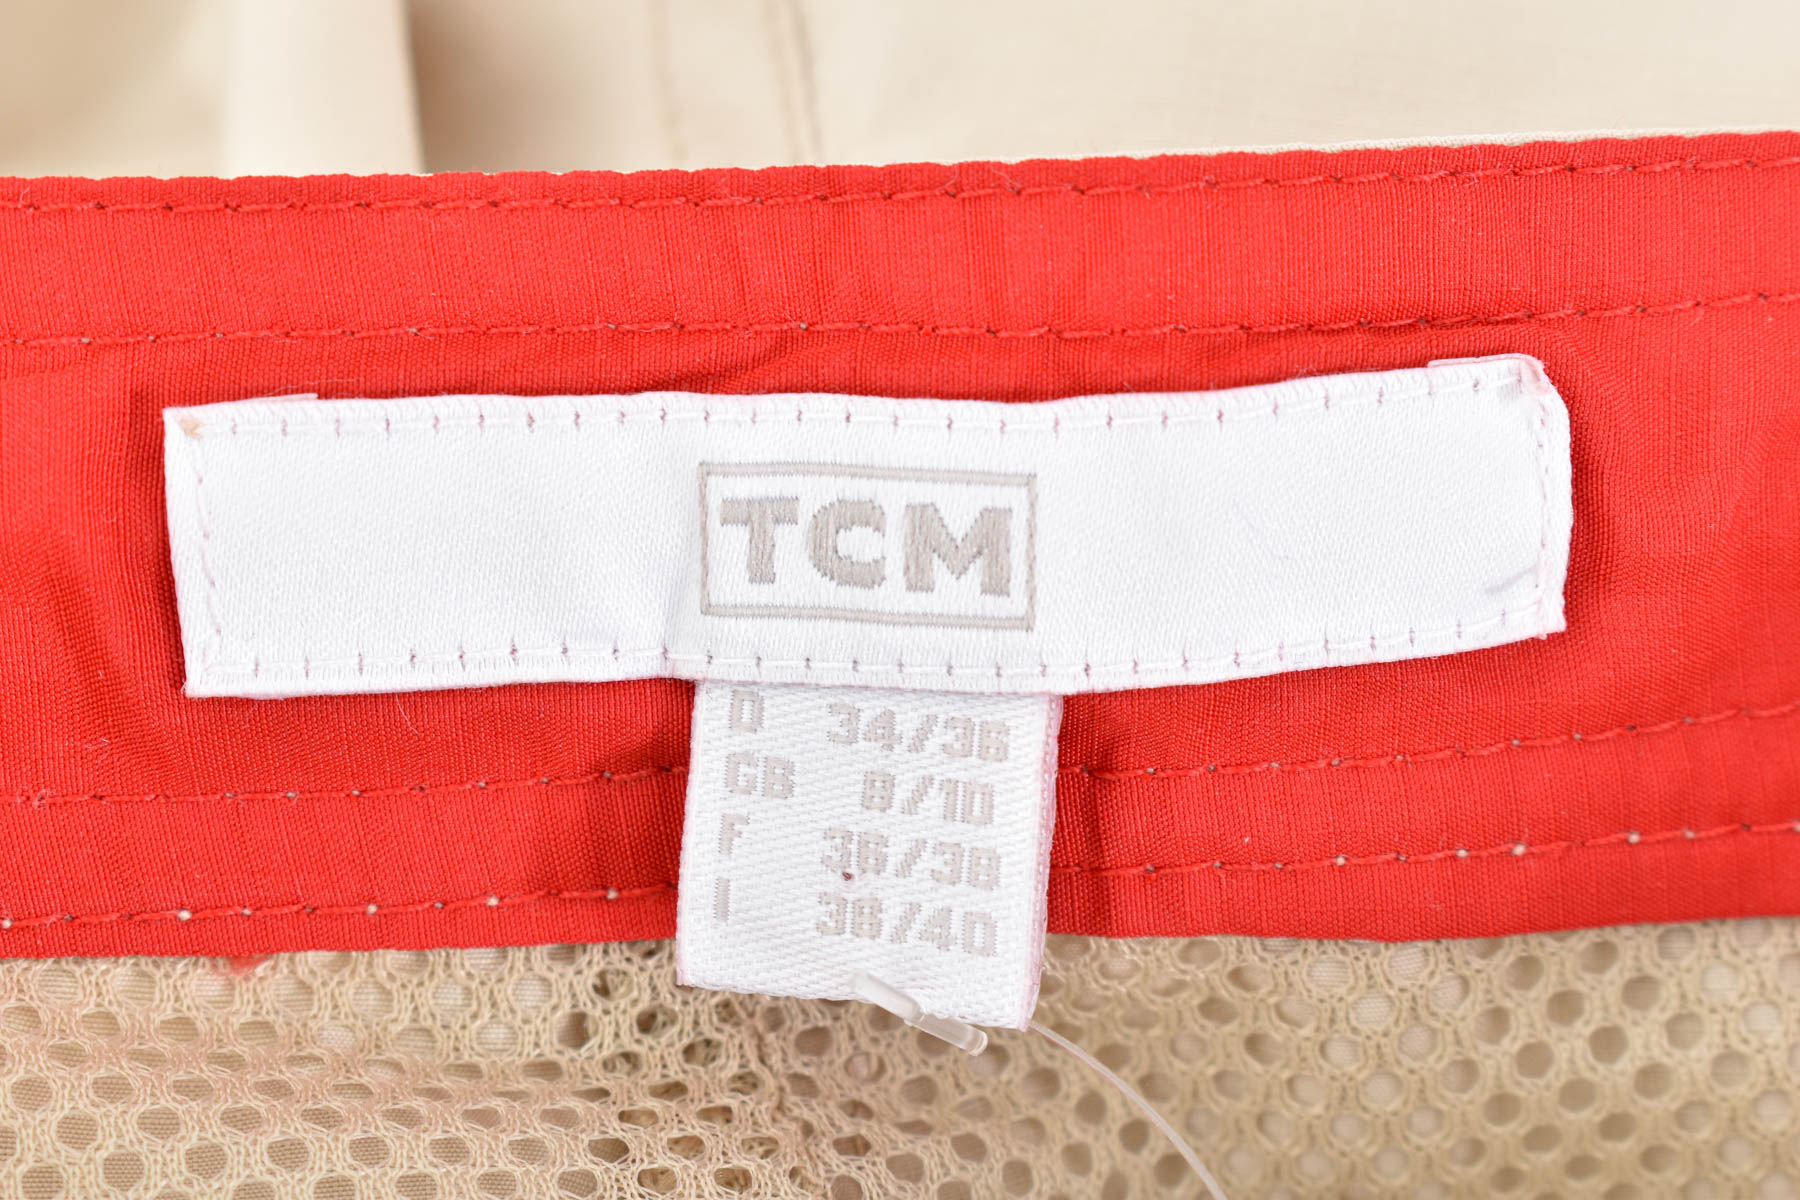 Pantaloni de damă - TCM - 2